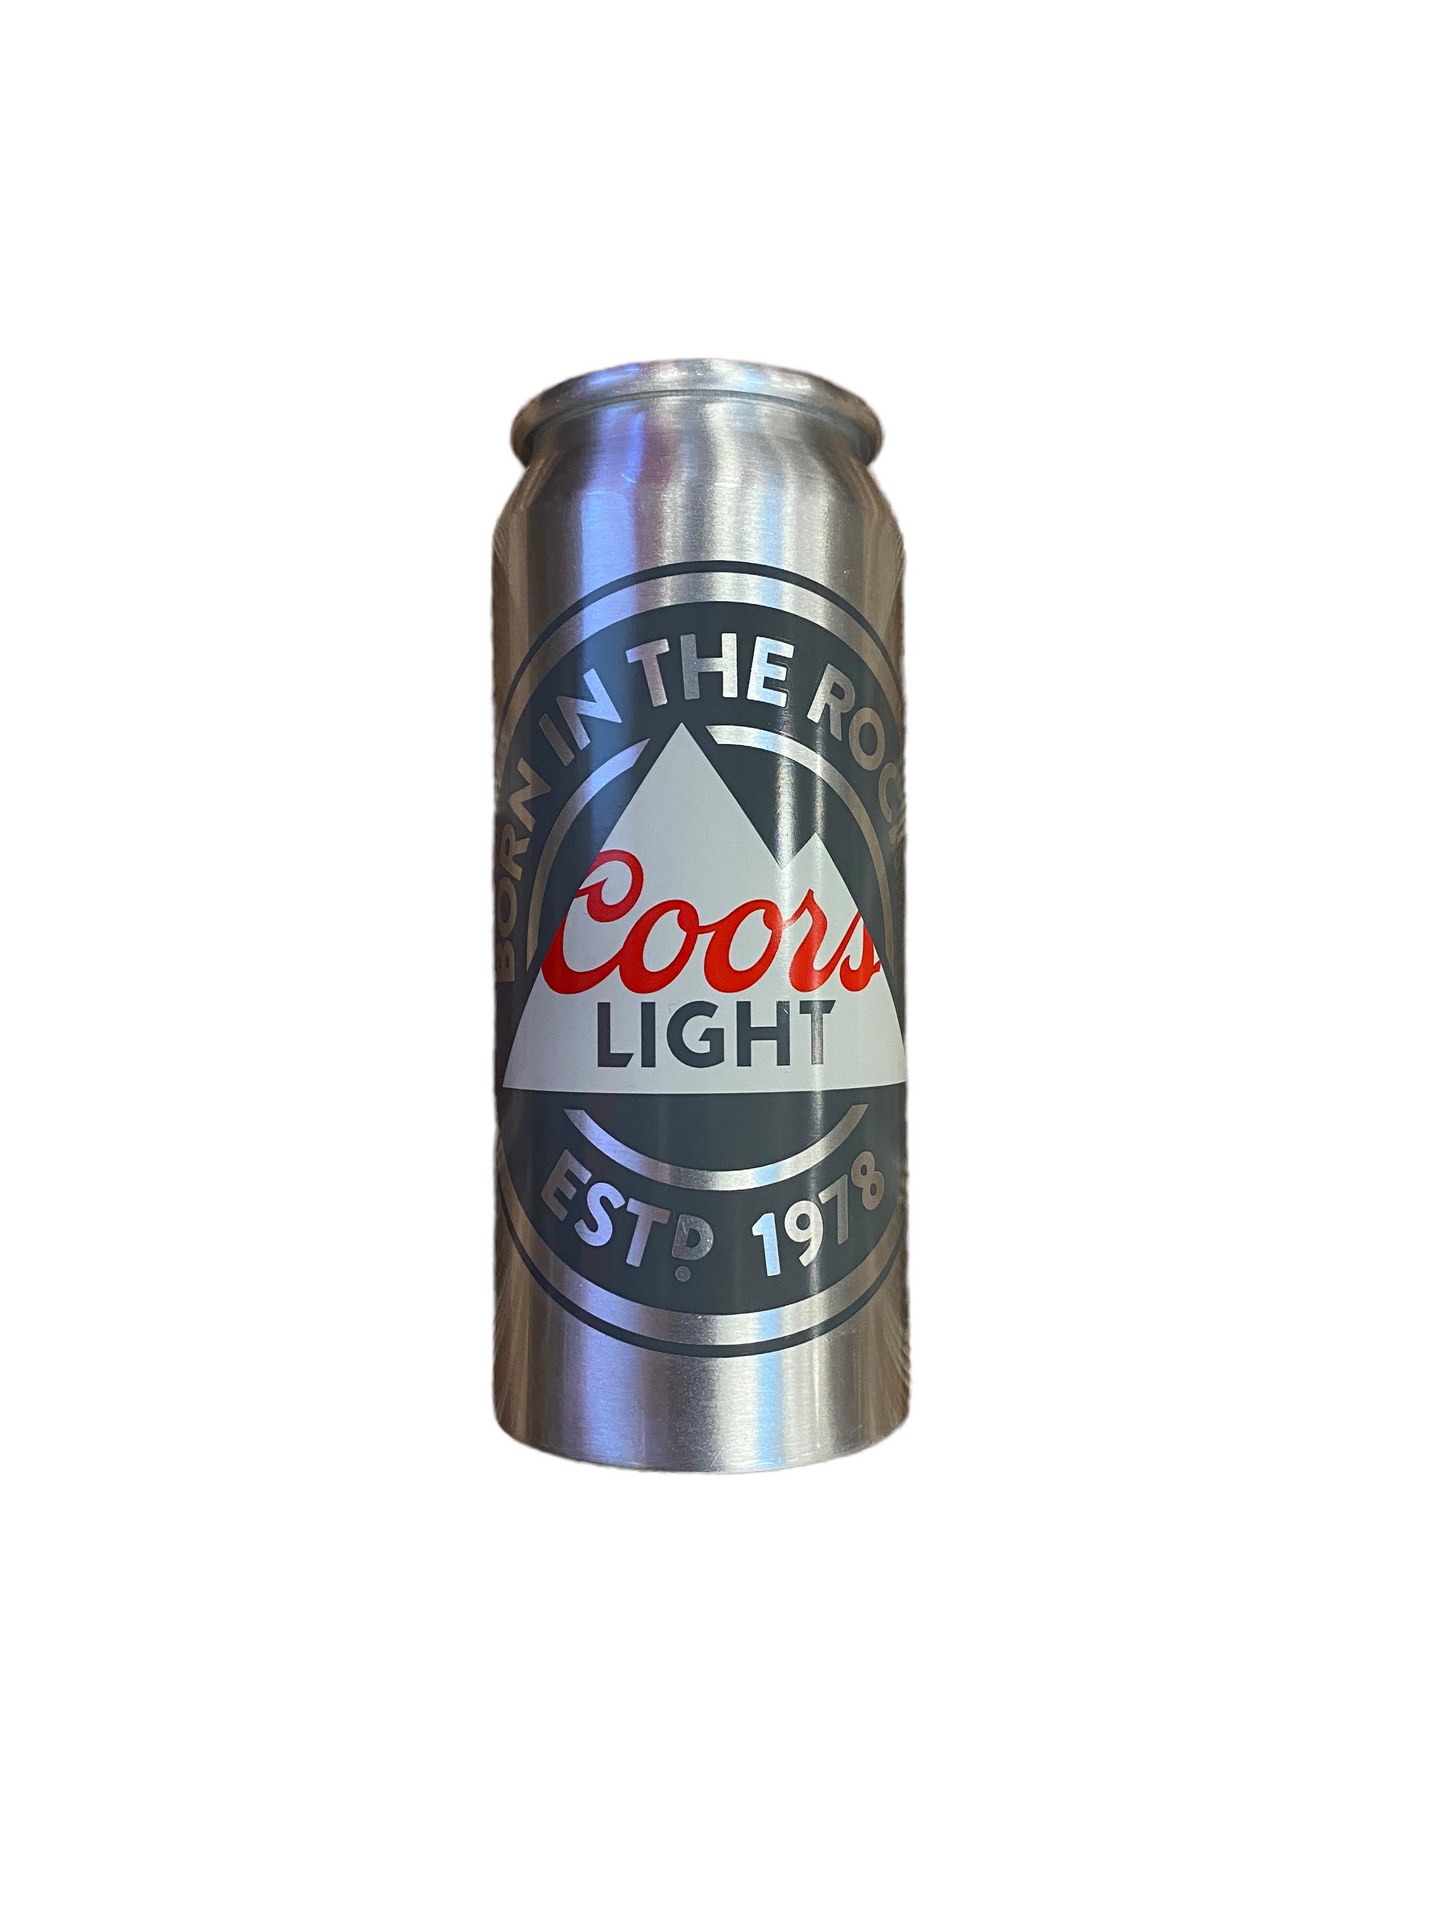 Coors LITE 16 OUNCE ALUMINUM DRINKING CAN. MILLER-COORS. U.S.A.